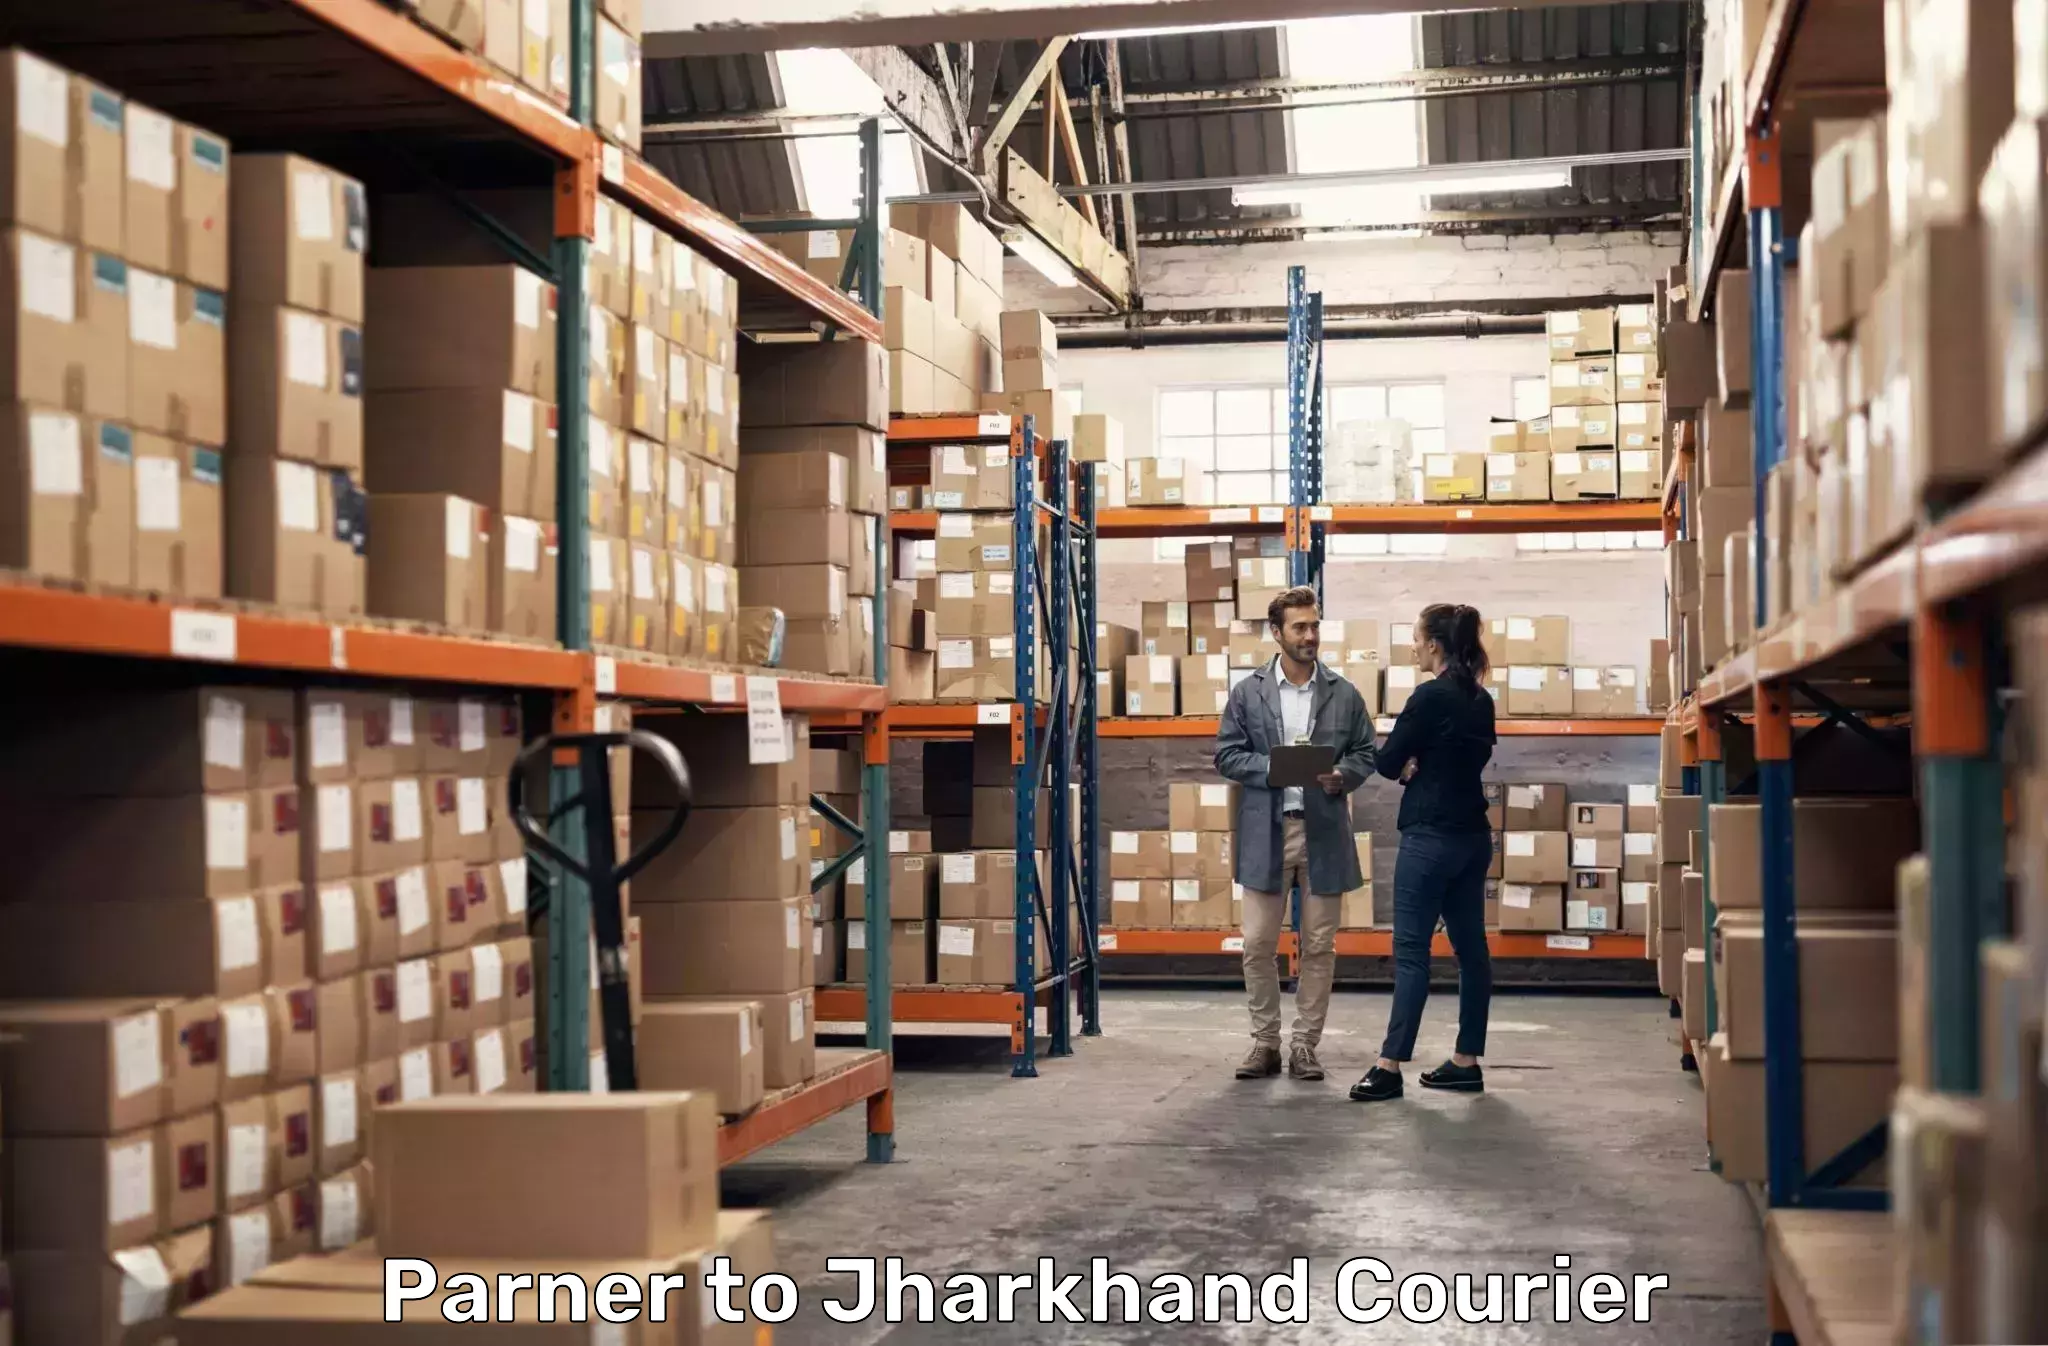 High-capacity parcel service Parner to Peterbar